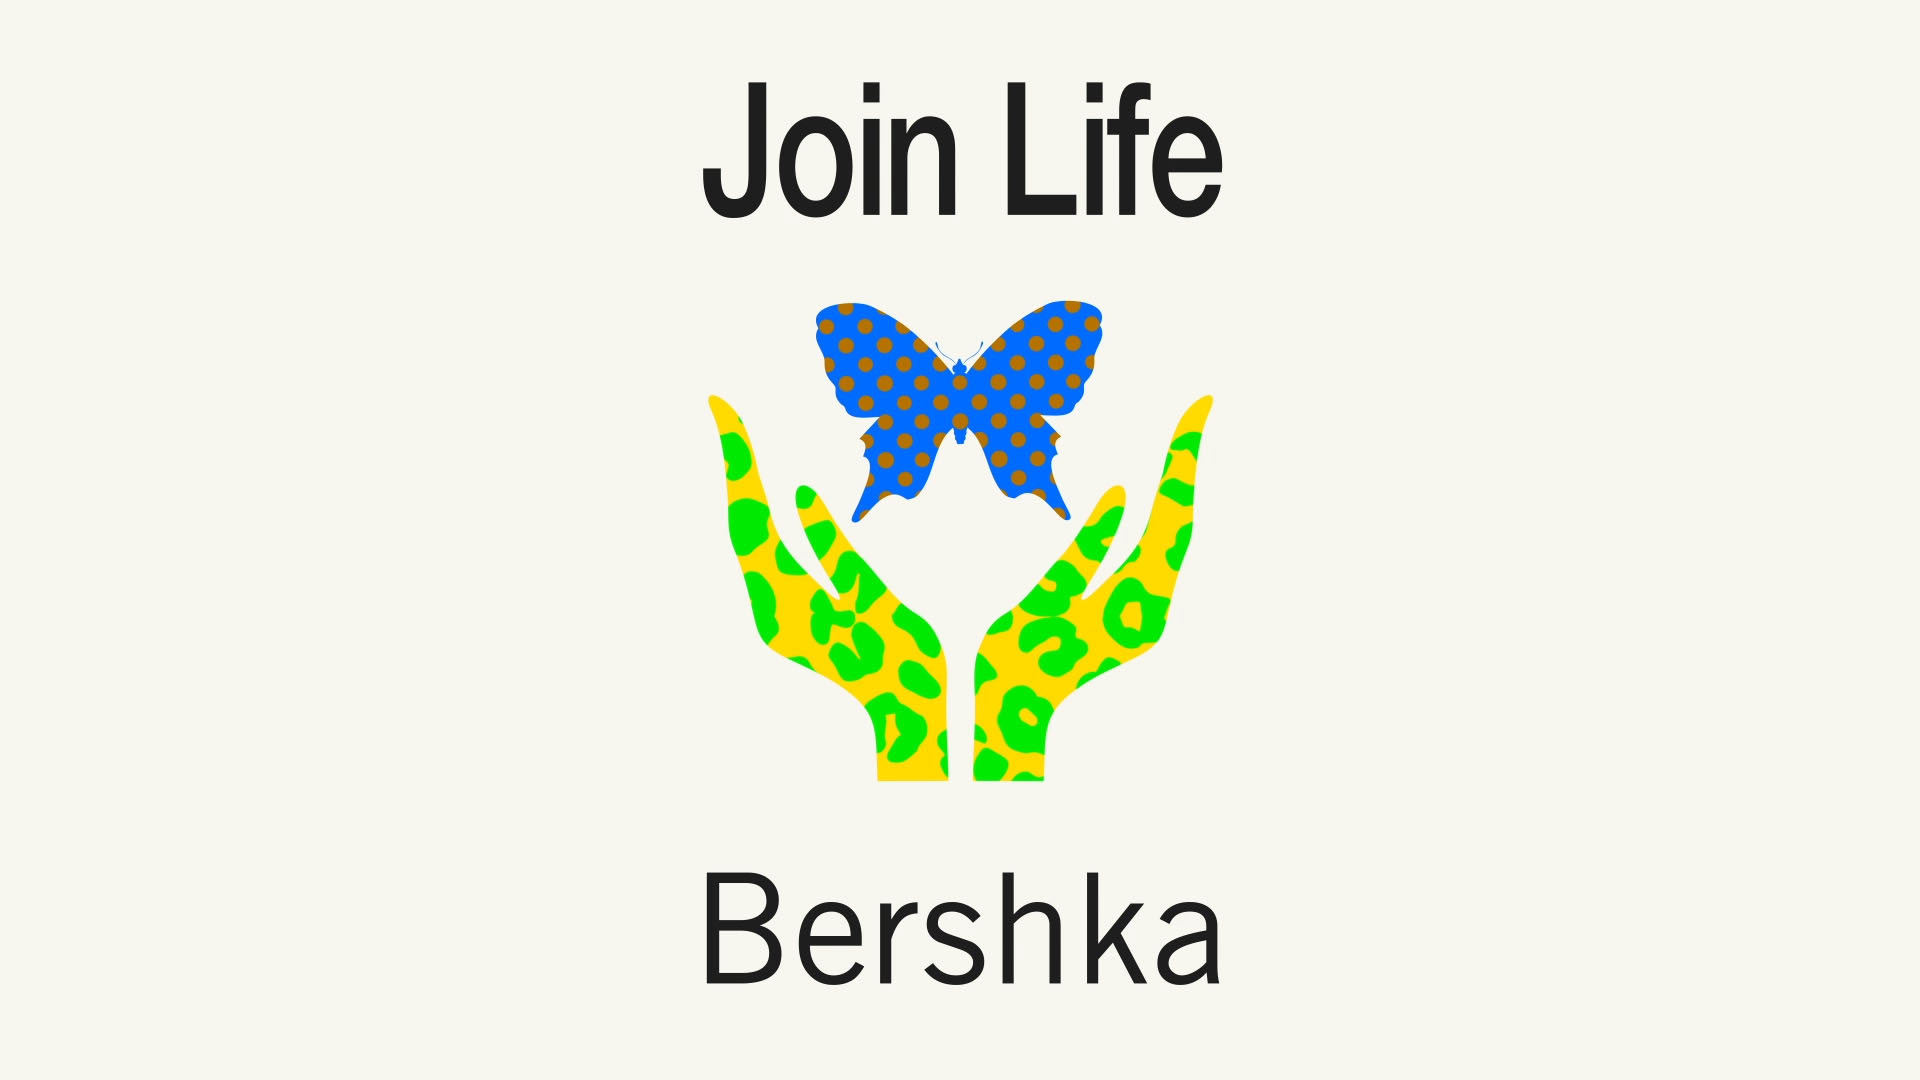 Bershka – Join Life